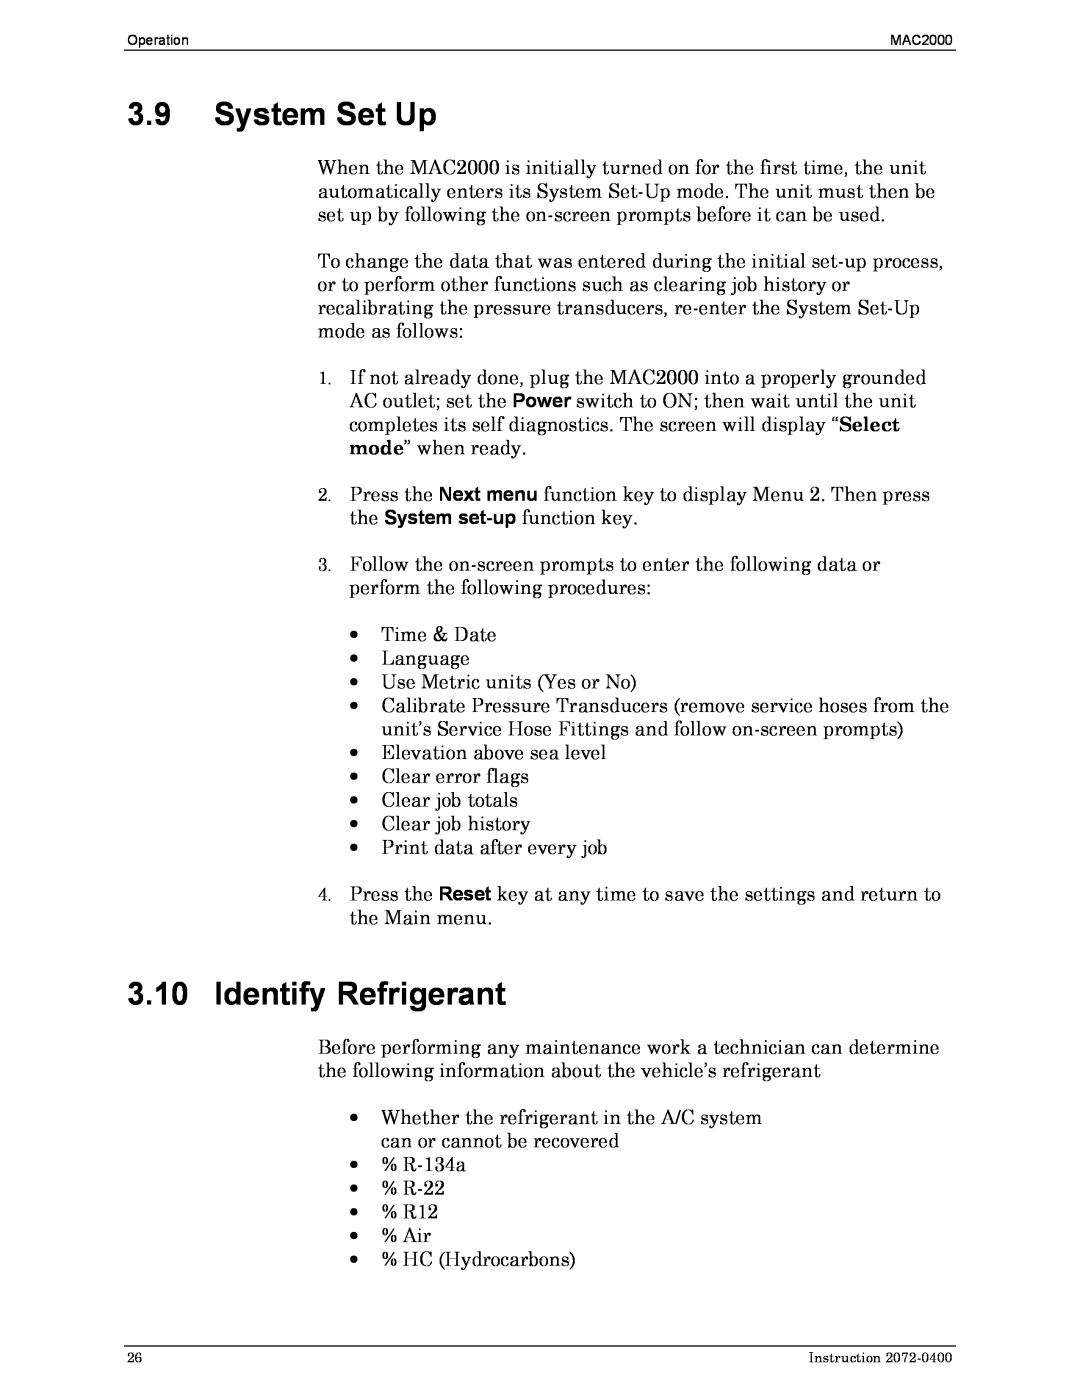 Bacharach 2072-0400 manual 3.9System Set Up, 3.10Identify Refrigerant 